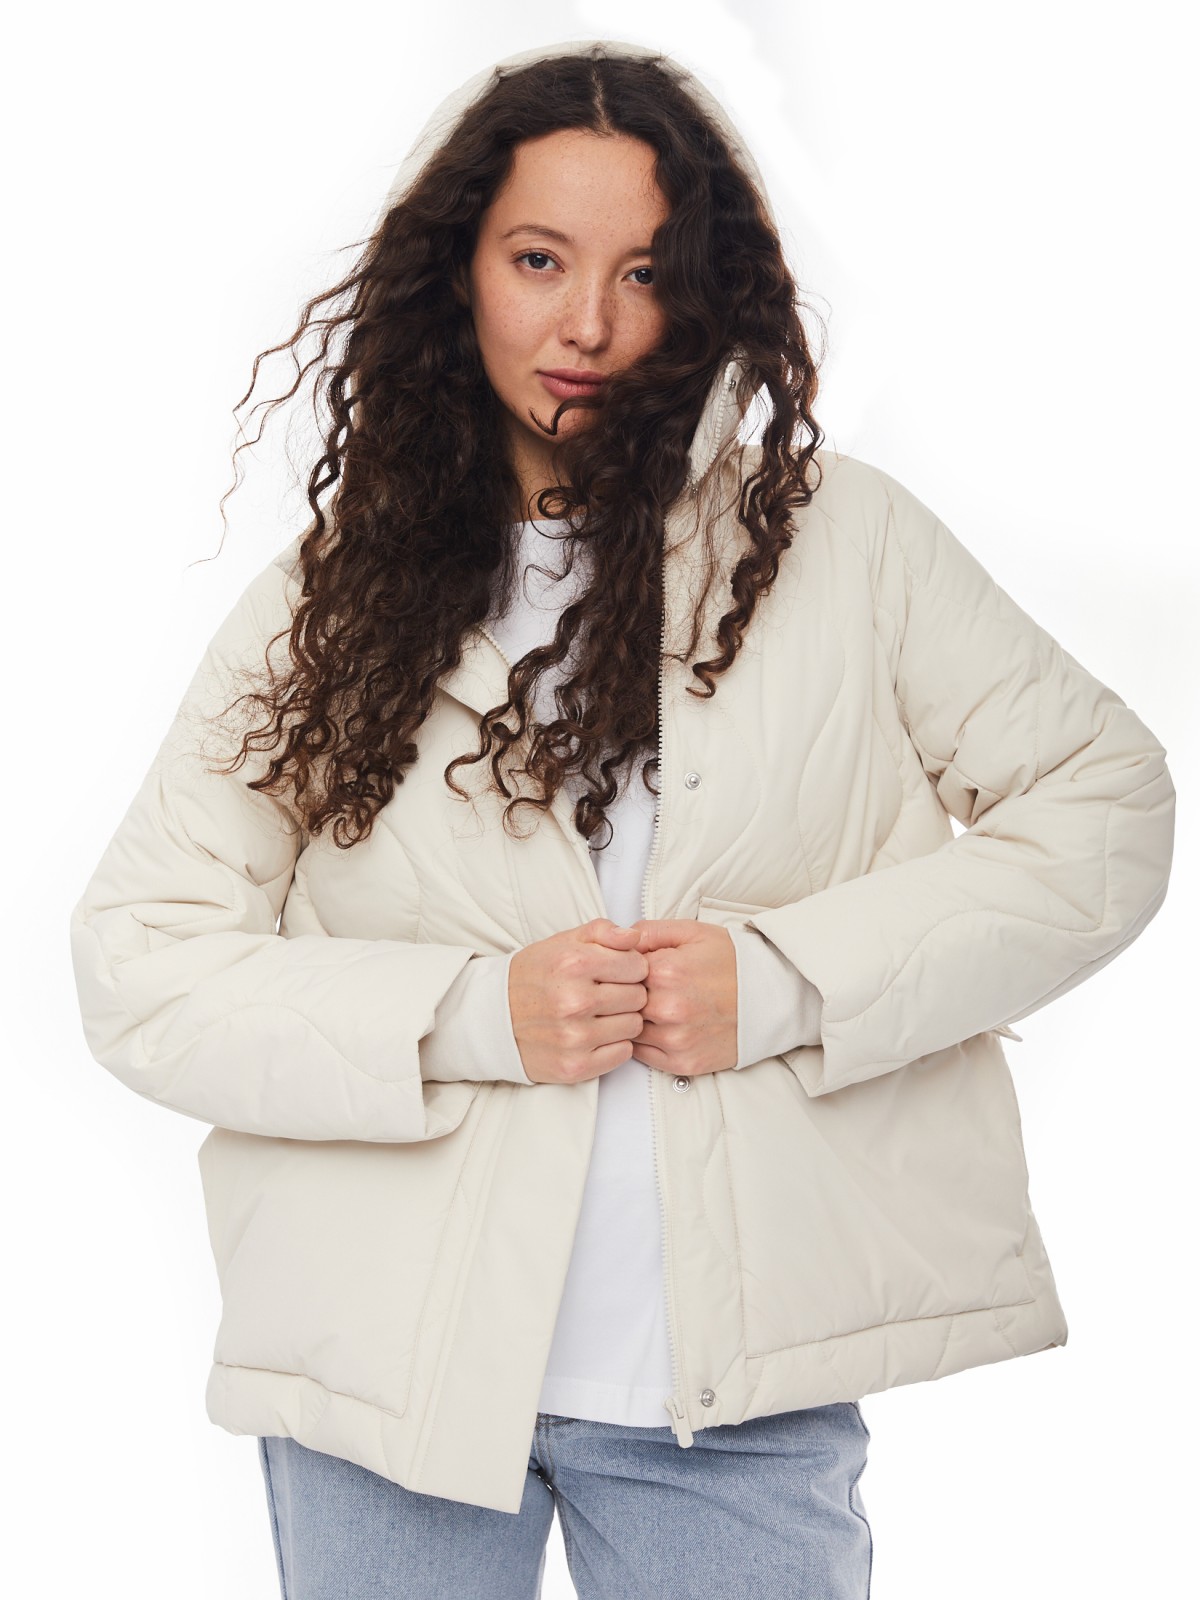 Тёплая дутая куртка оверсайз силуэта с капюшоном zolla 024125112424, цвет молоко, размер XS